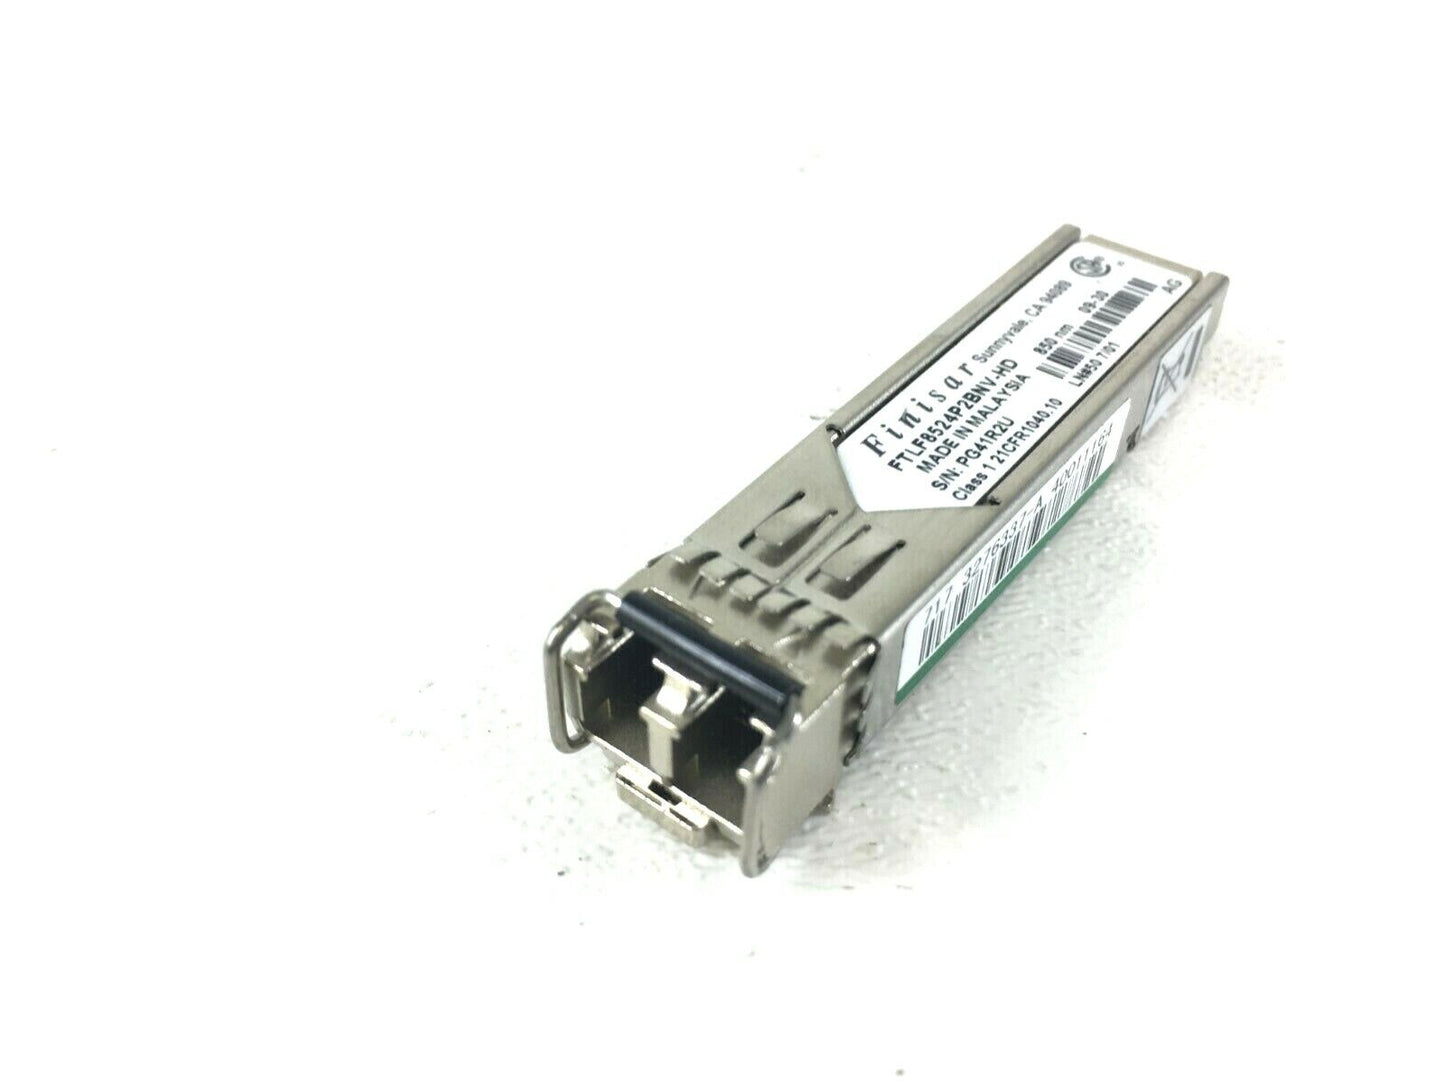 LOT OF 5 Finisar FTLF8524P2BNV-HD Ethernet Transceiver SFP